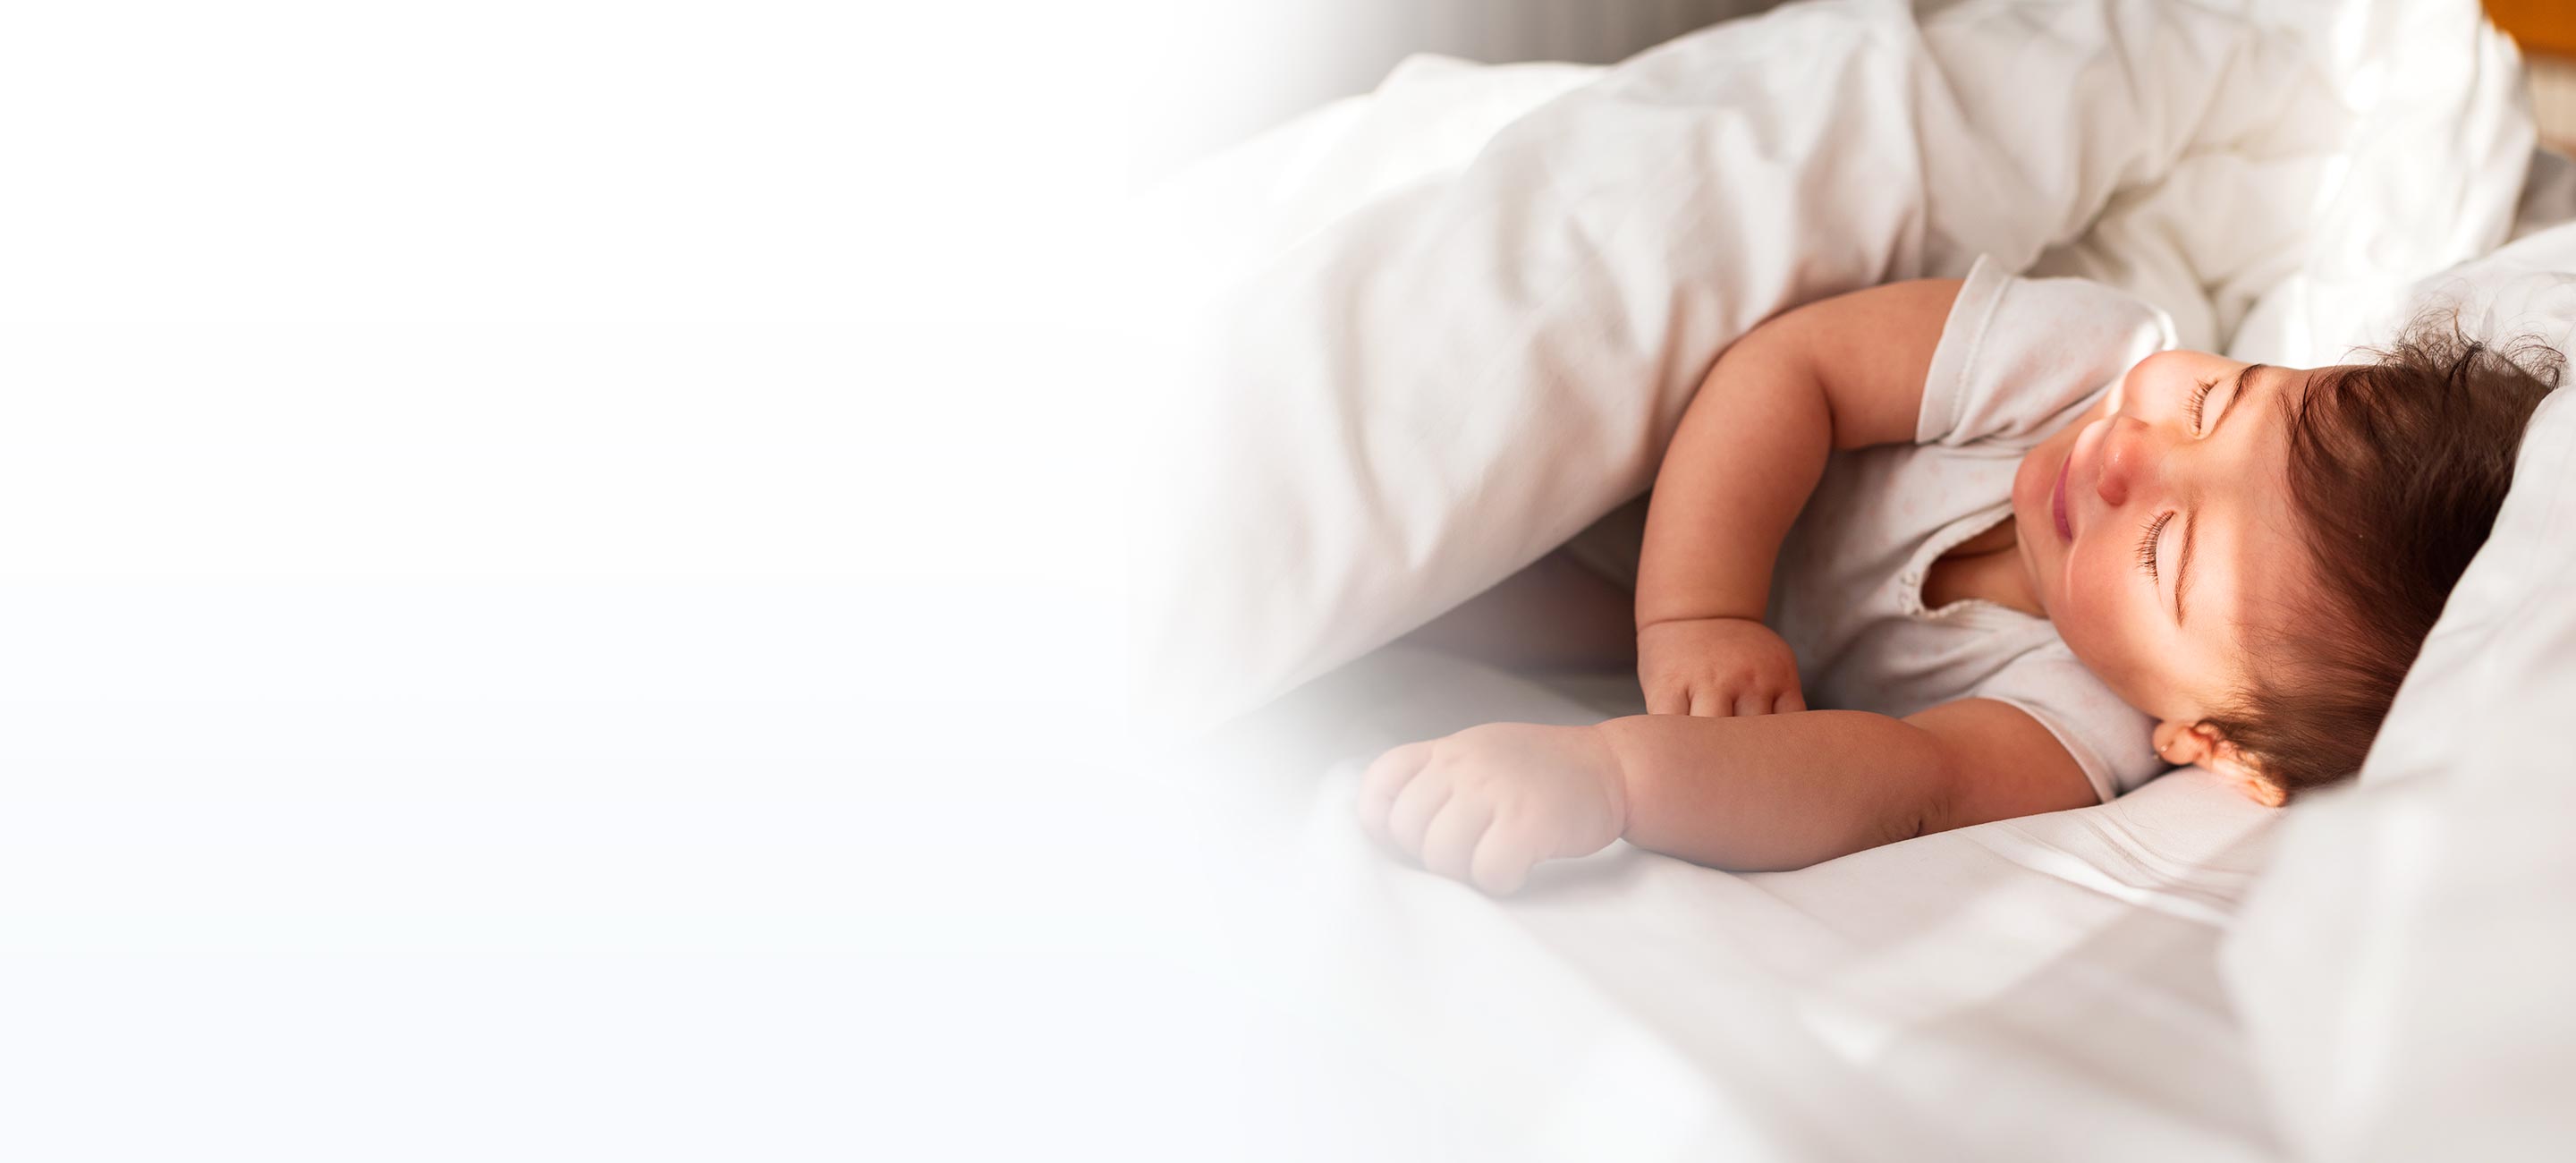 infant resting in bed